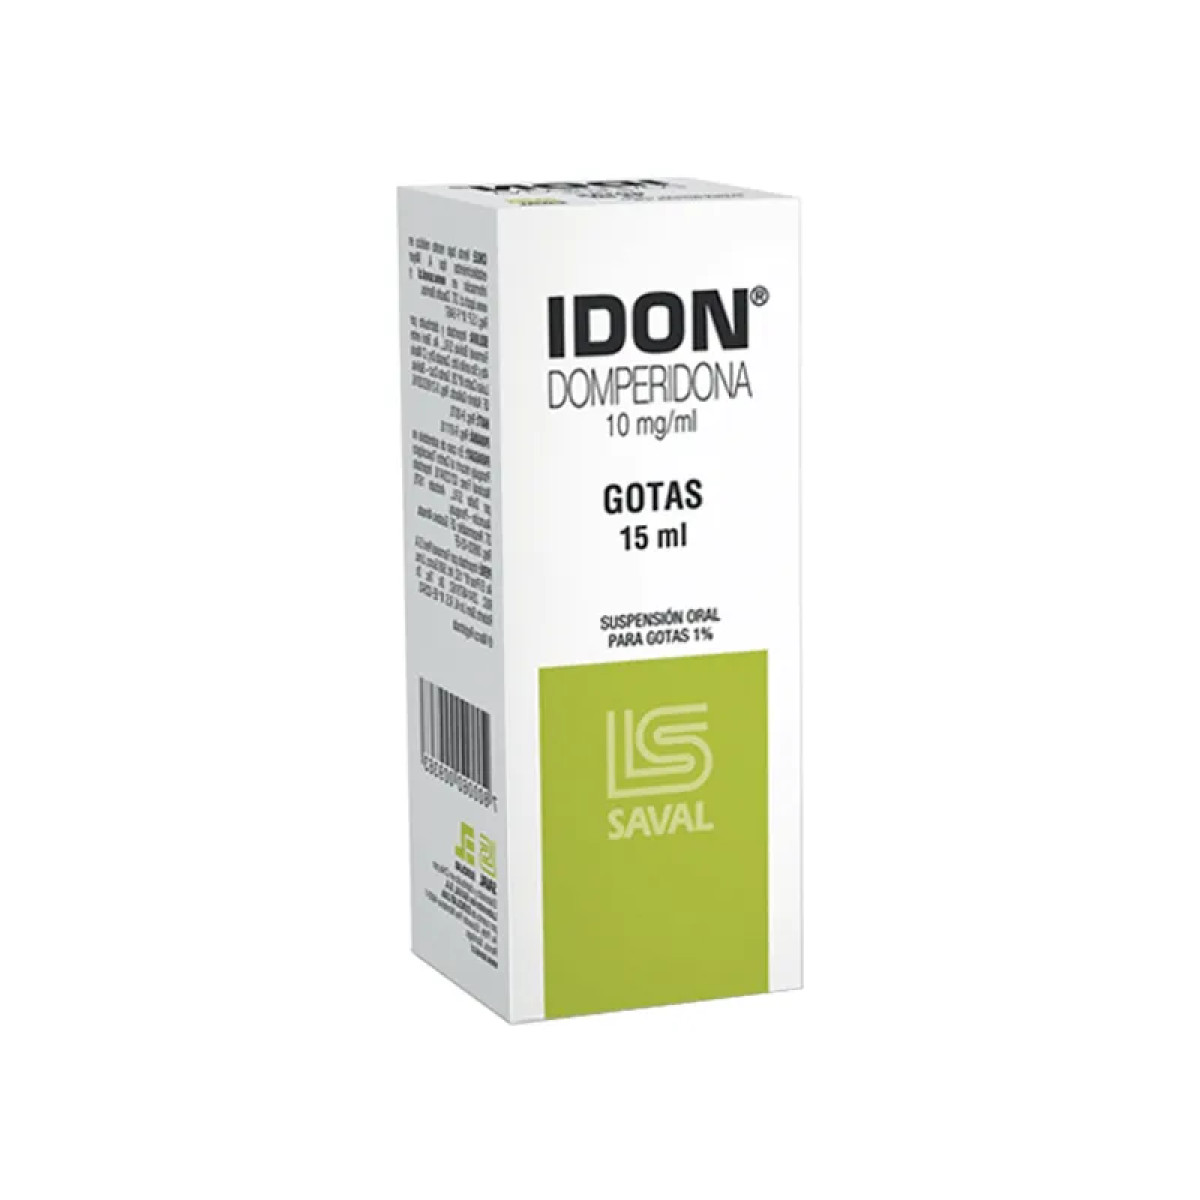 IDON GTS ORAL X 15 ML